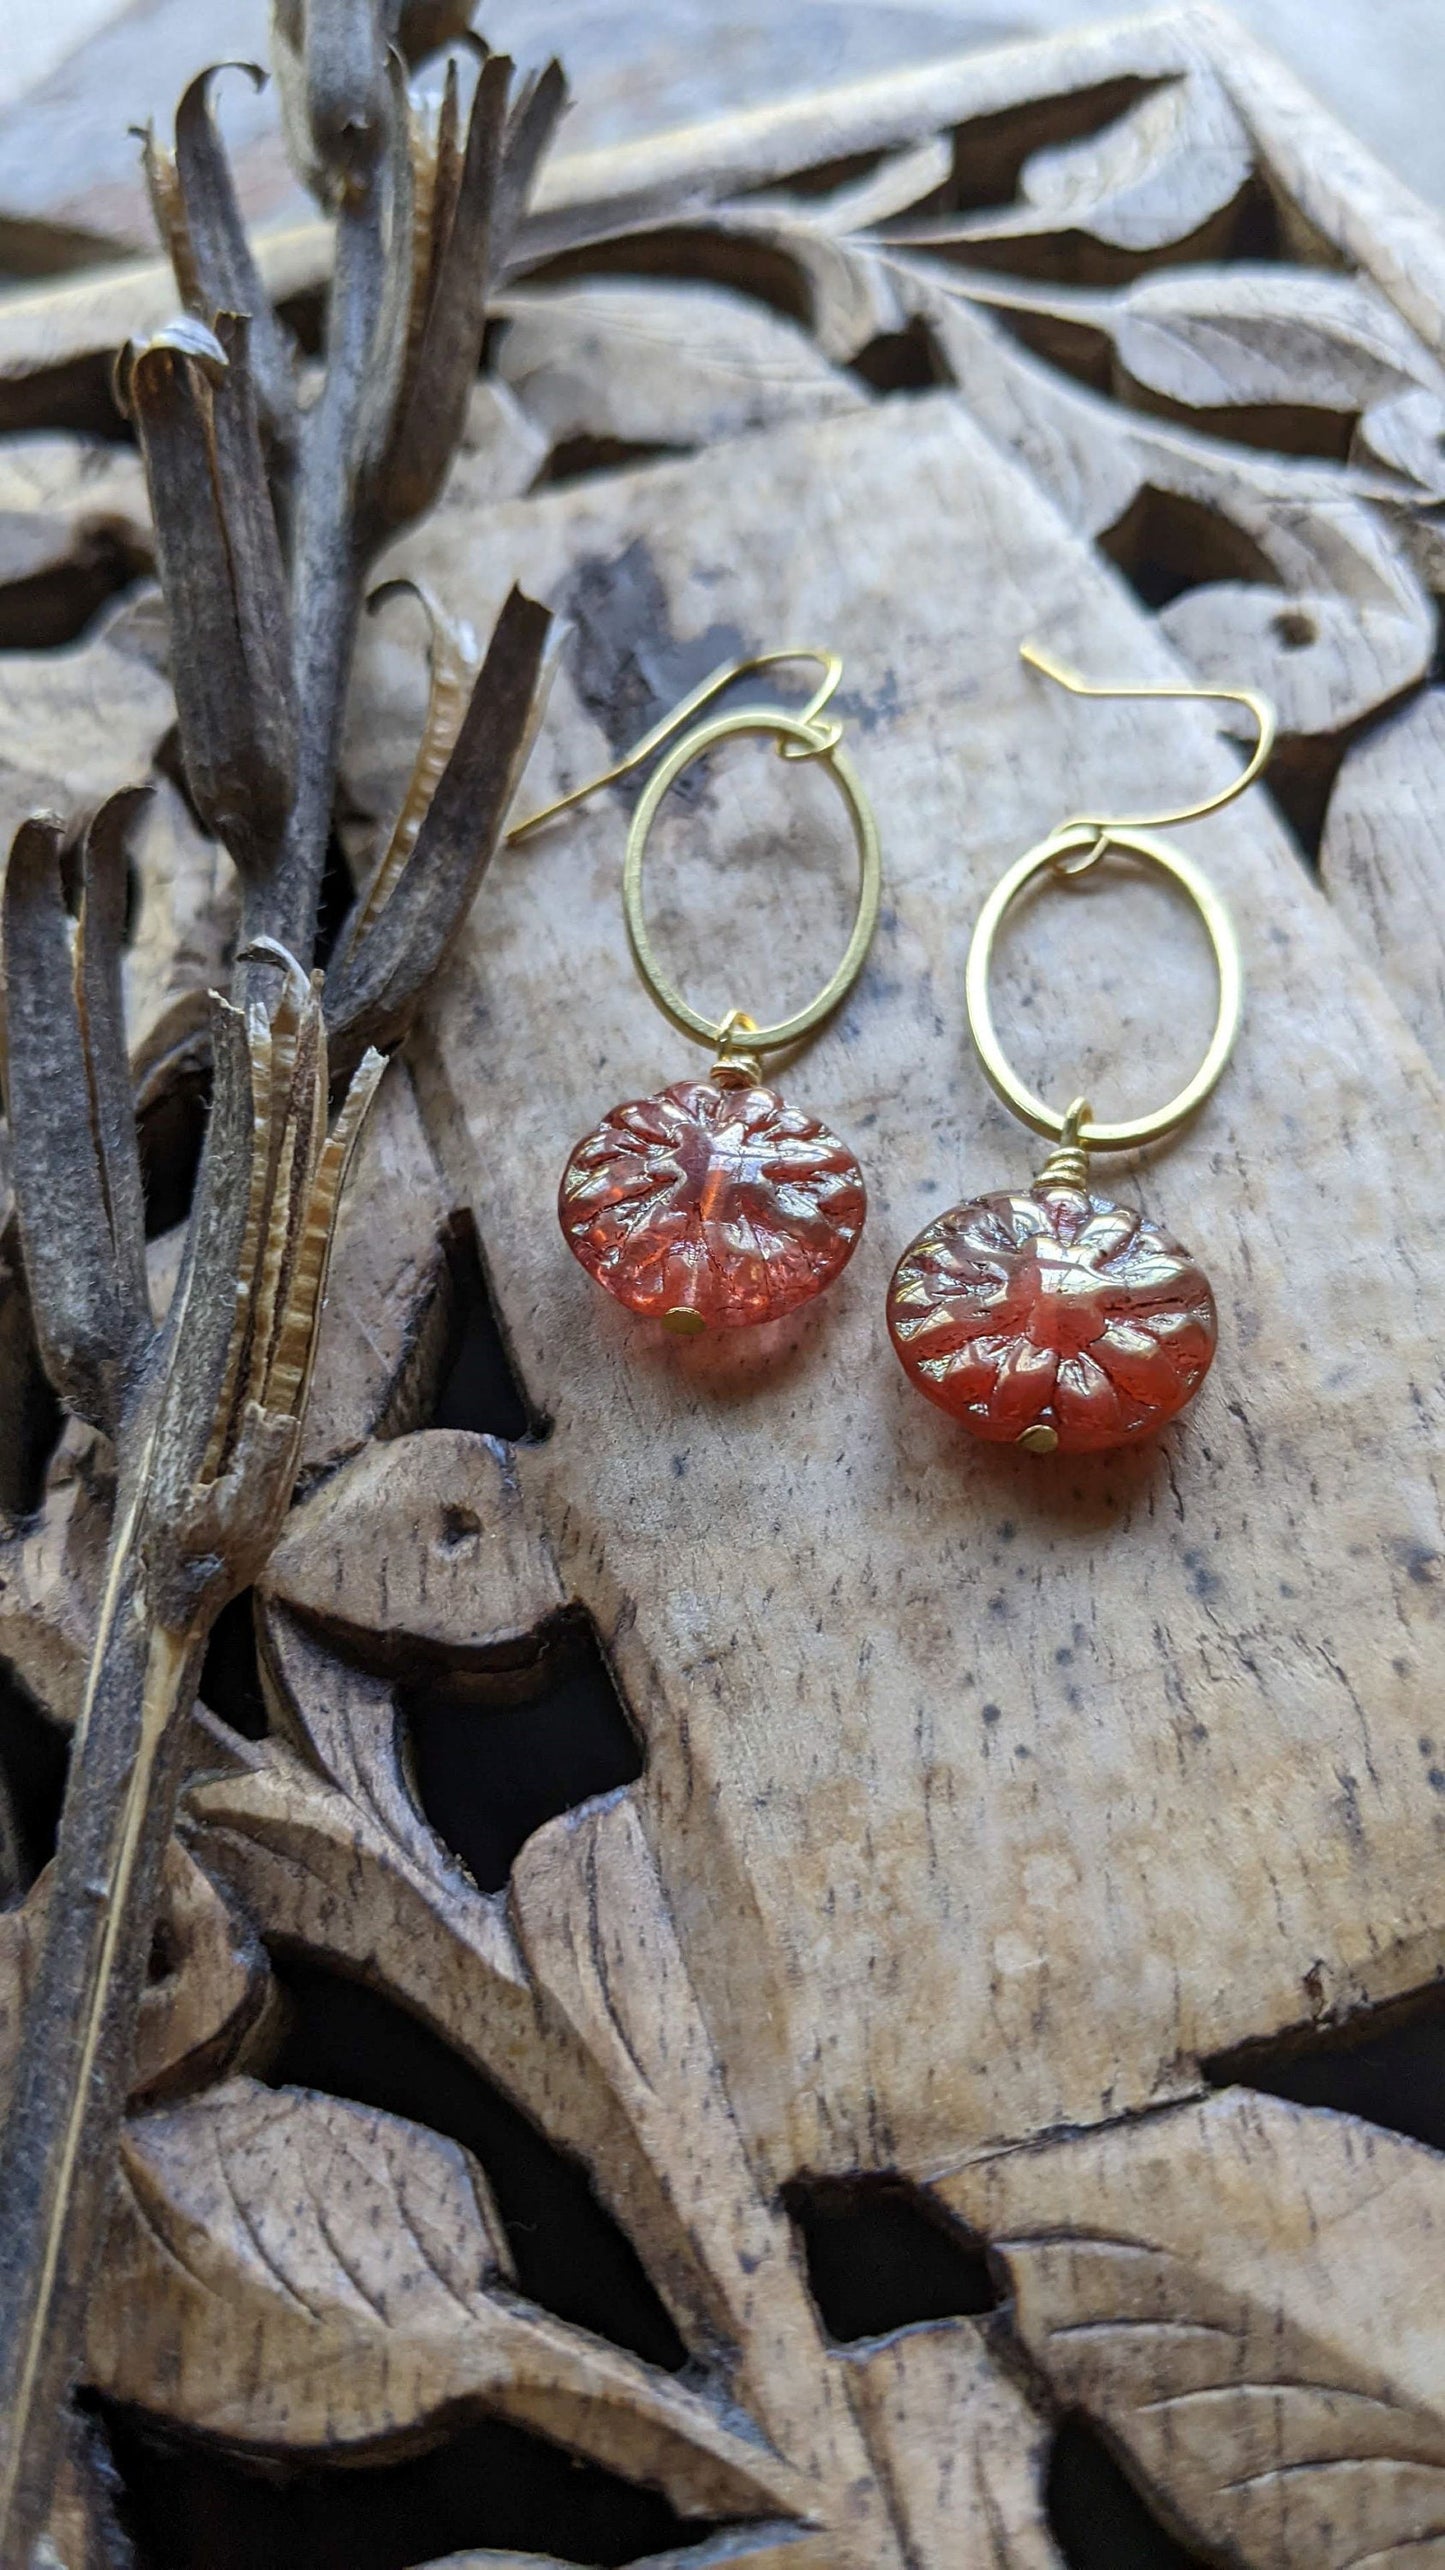 Sunburst orange glass and brass geometric earrings